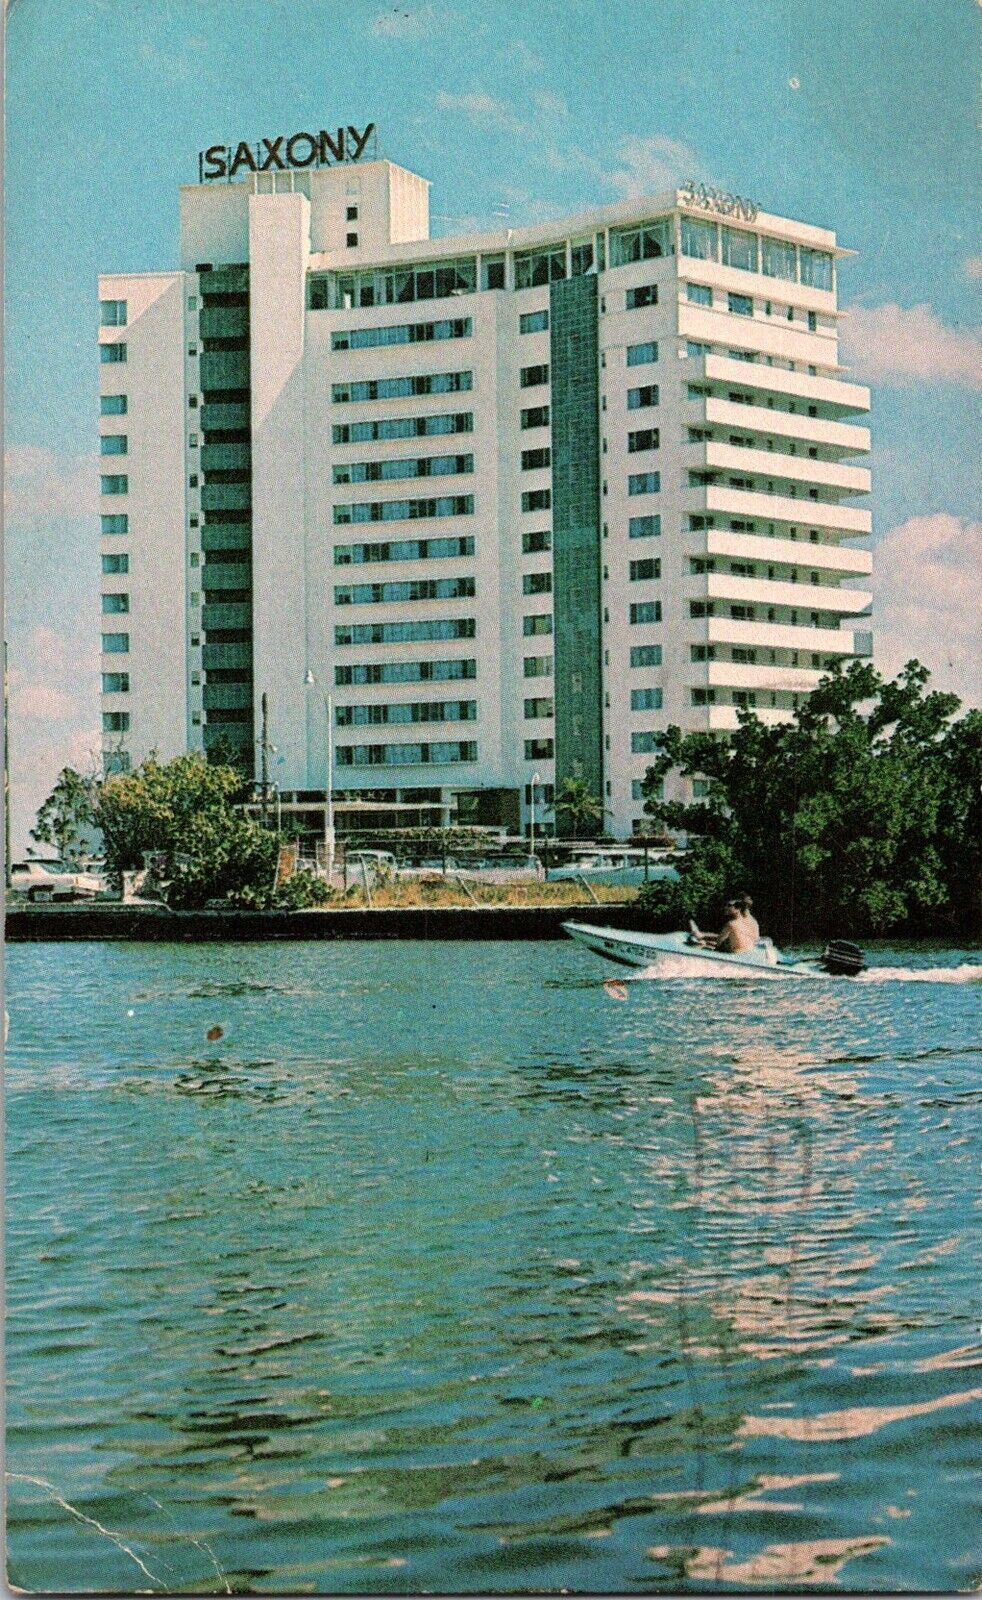 Florida Postcard: The Saxony Hotel 